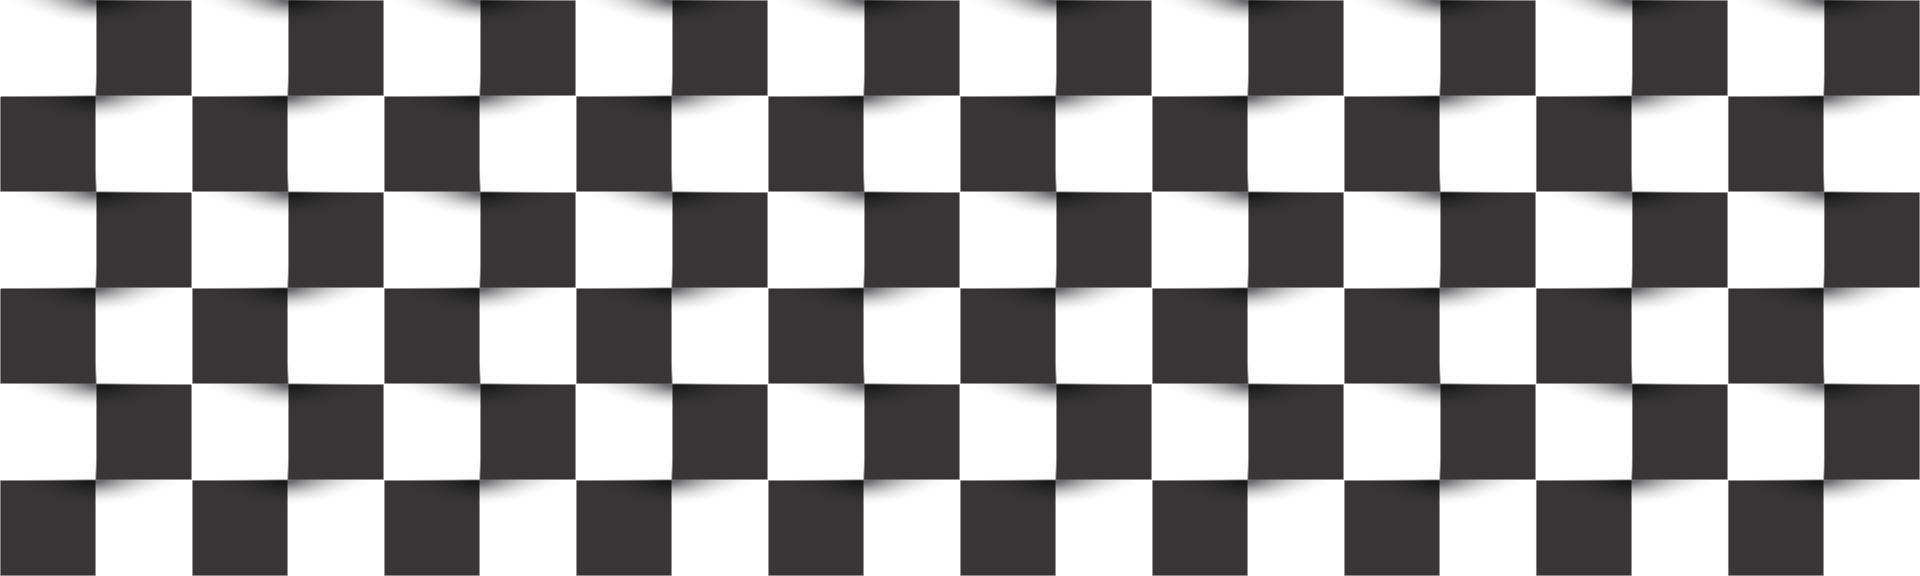 cabeçalho xadrez preto e branco. simples textura quadrada de vetor abstrato de tabuleiro de xadrez